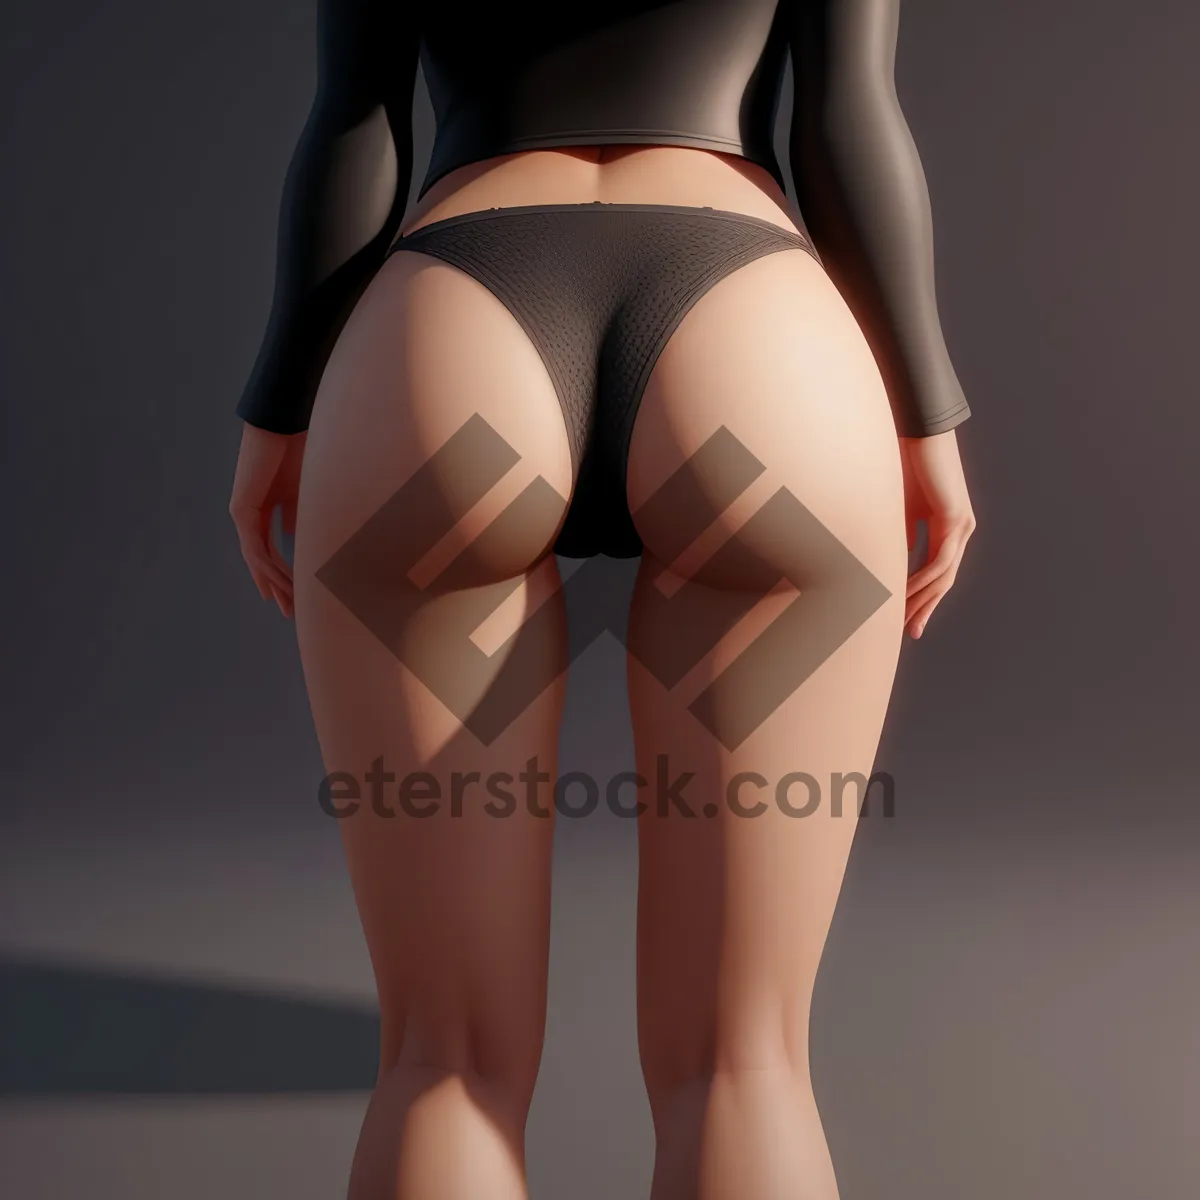 Picture of Seductive Lingerie Model Posing in Attractive Underwear